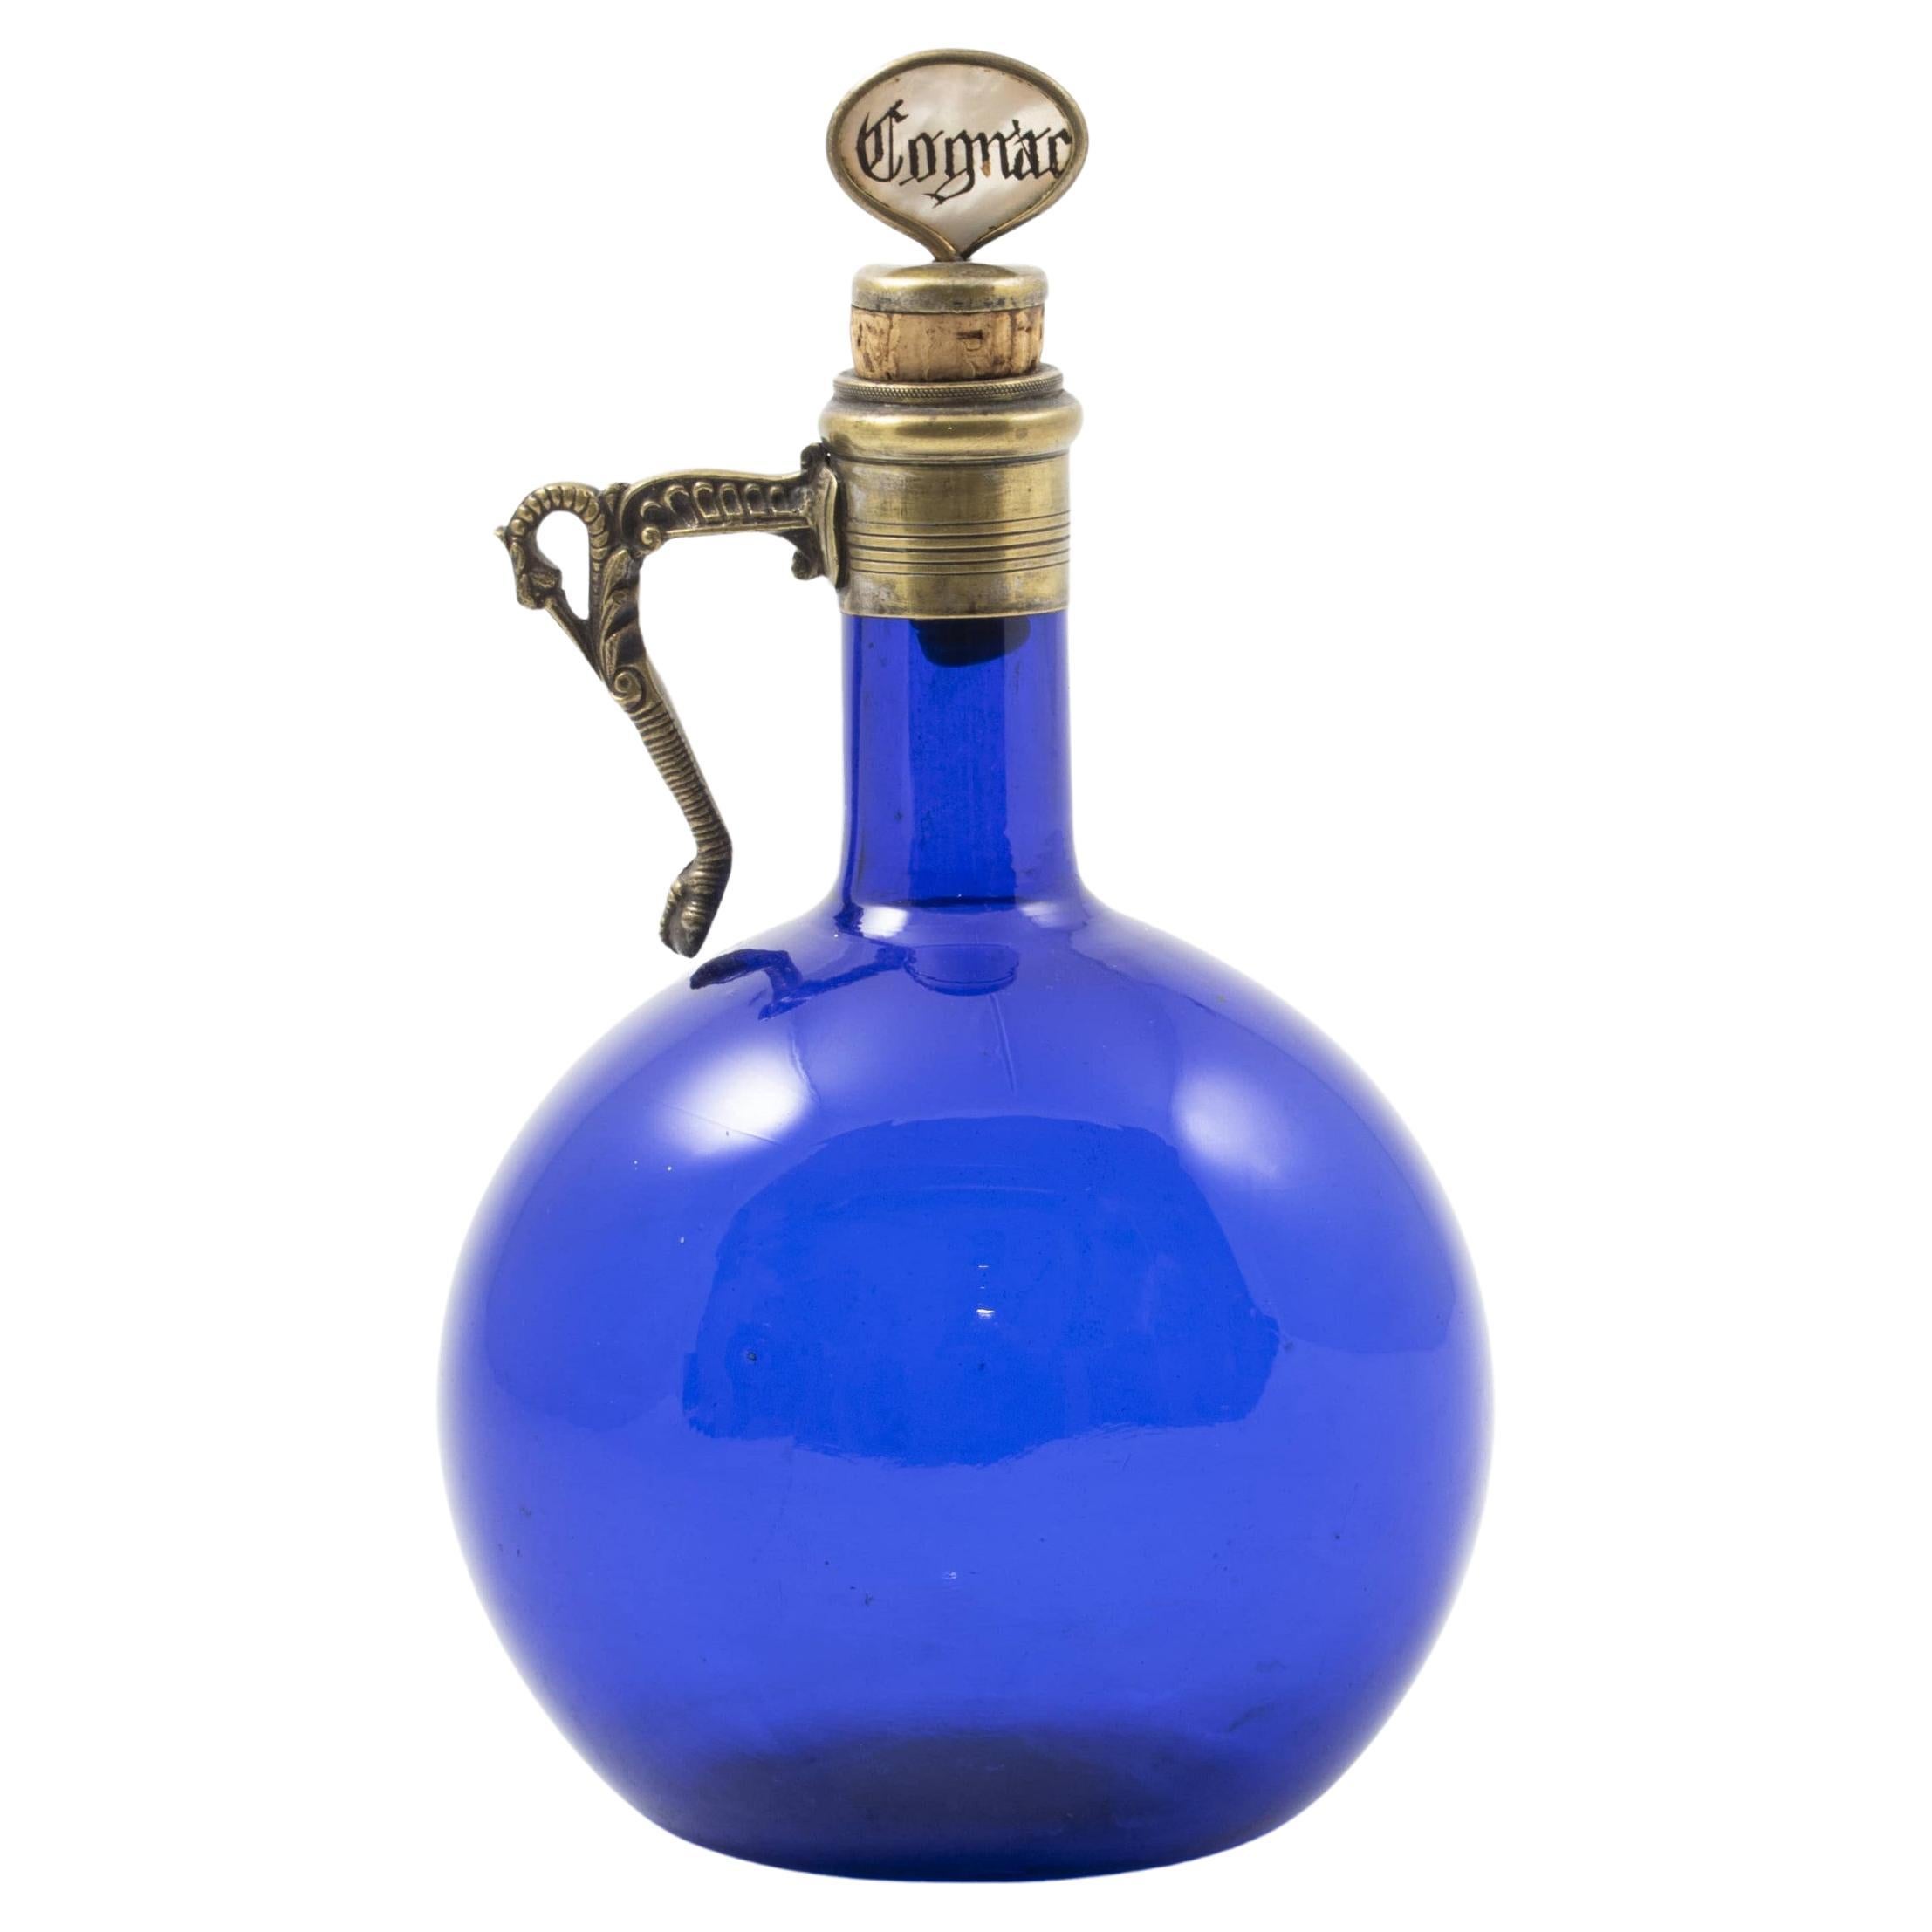 English Regency Blue Glass Cognac Decanter